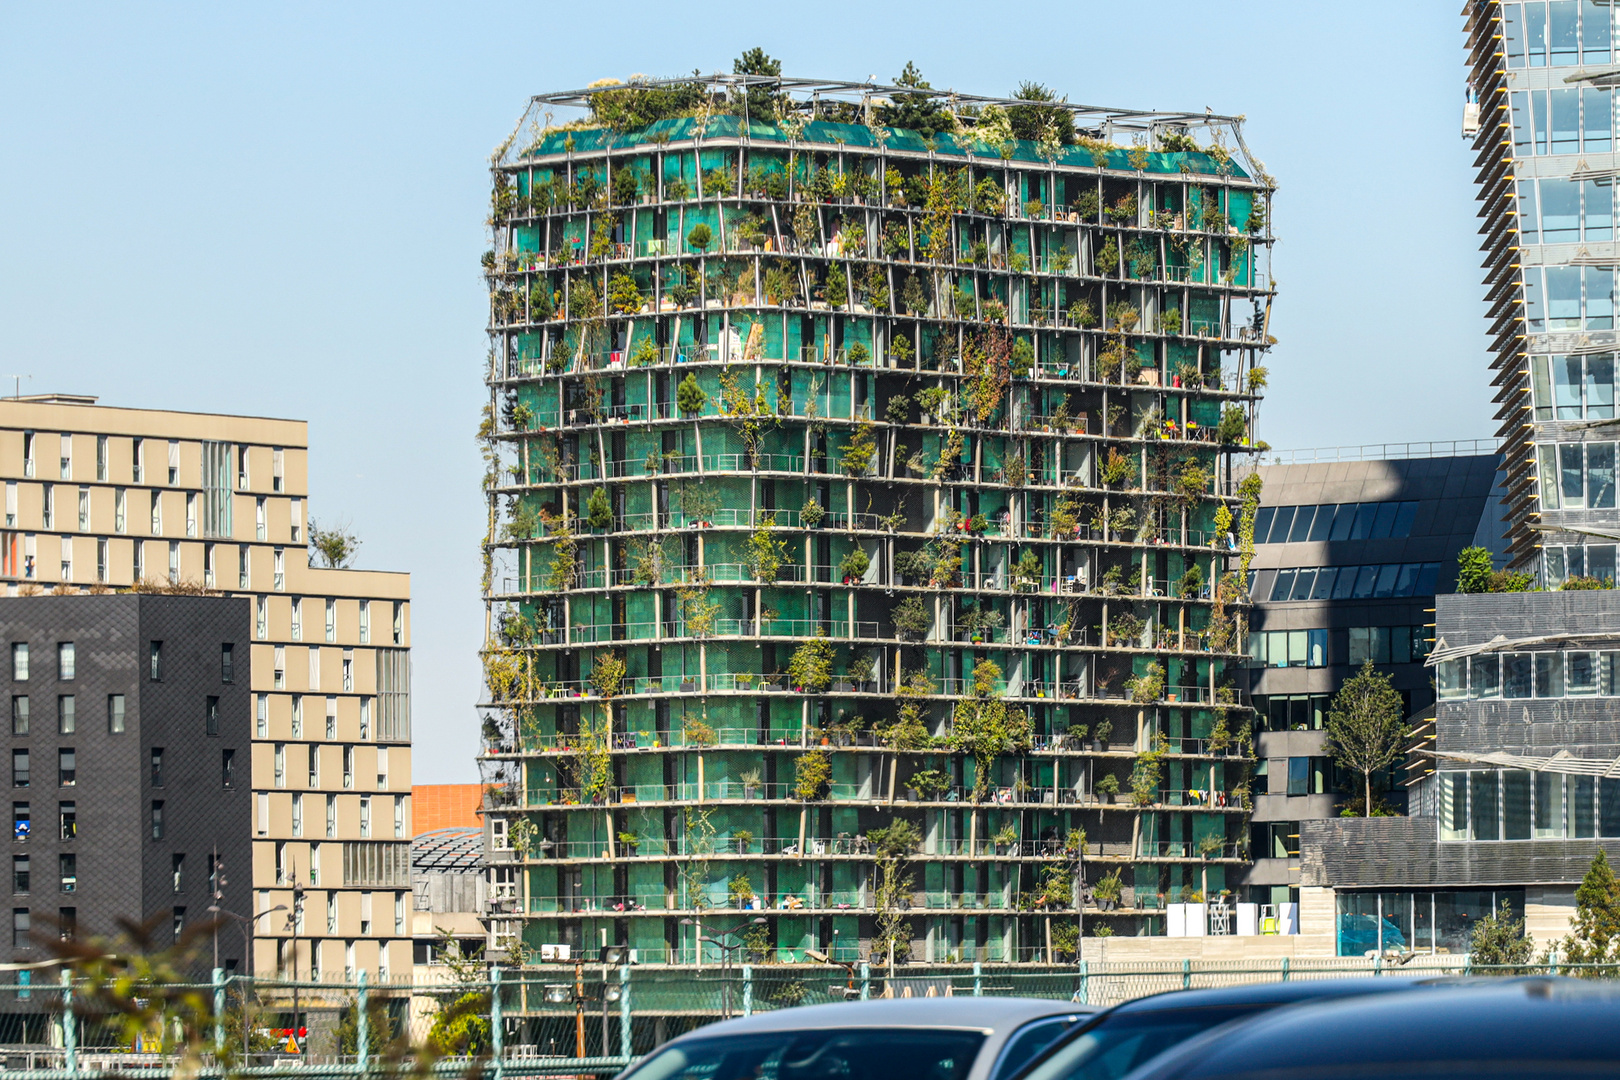 "Grüne Architektur"